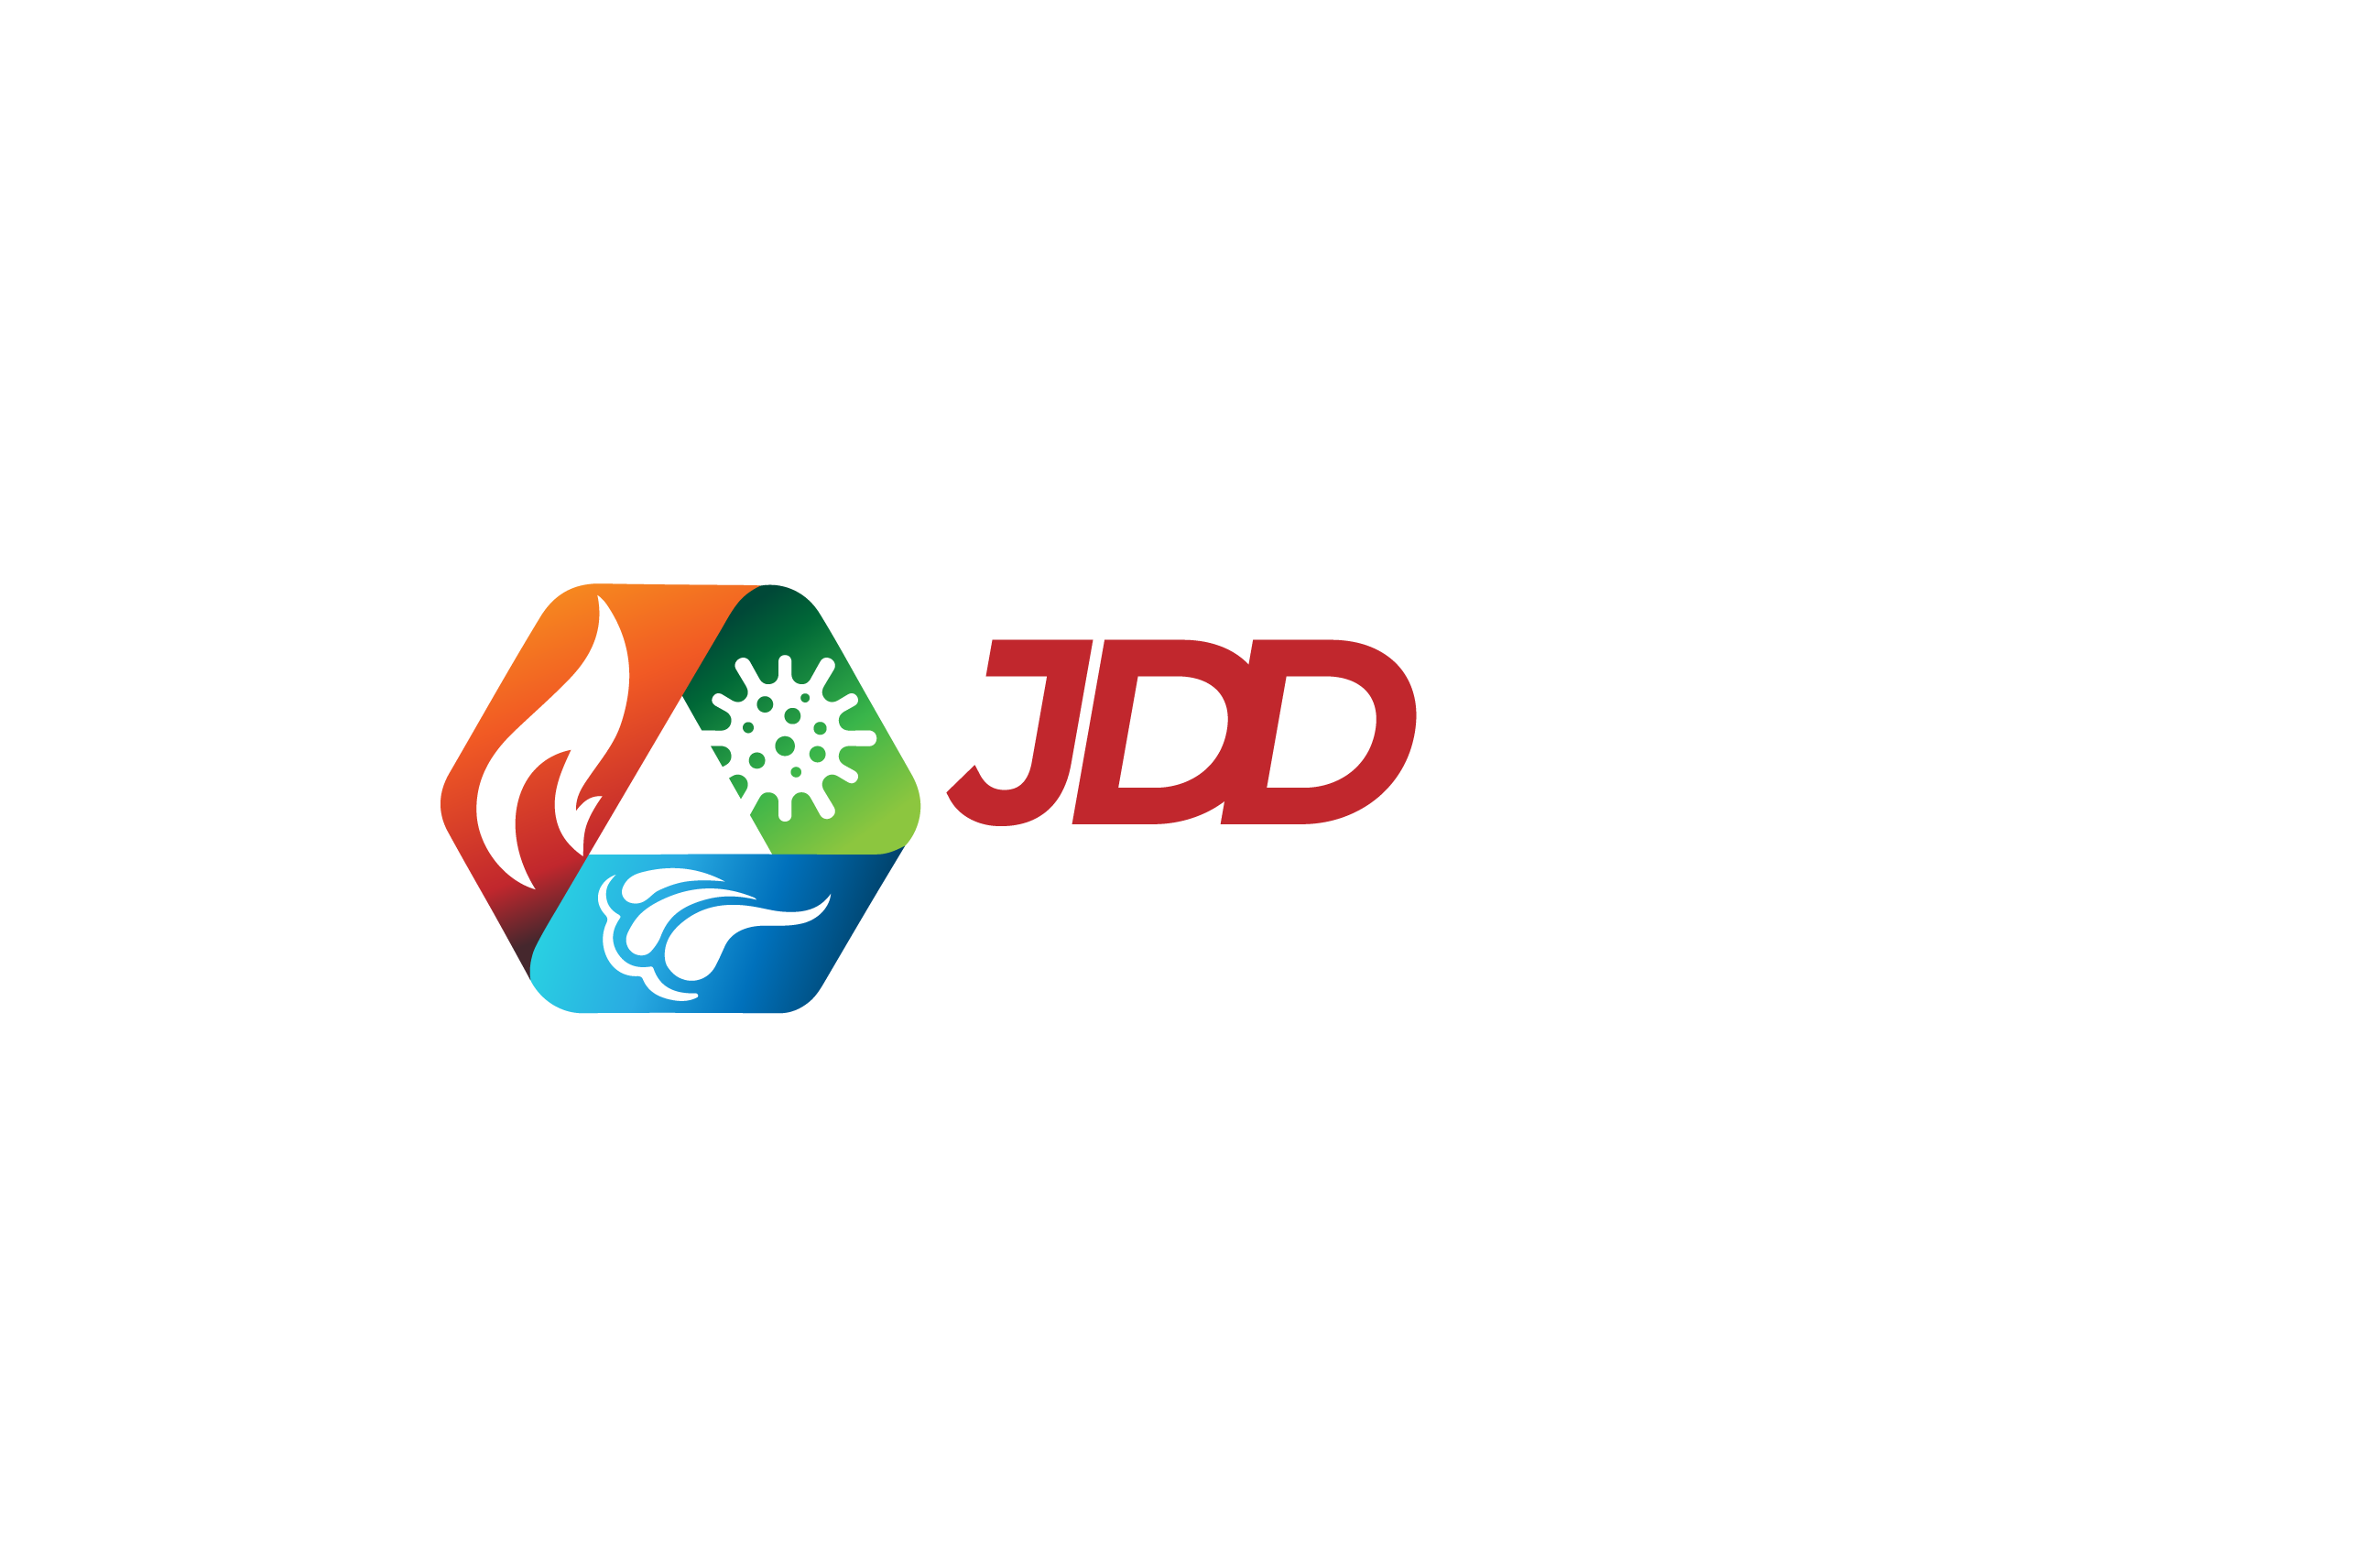 JDD Restoration Corp